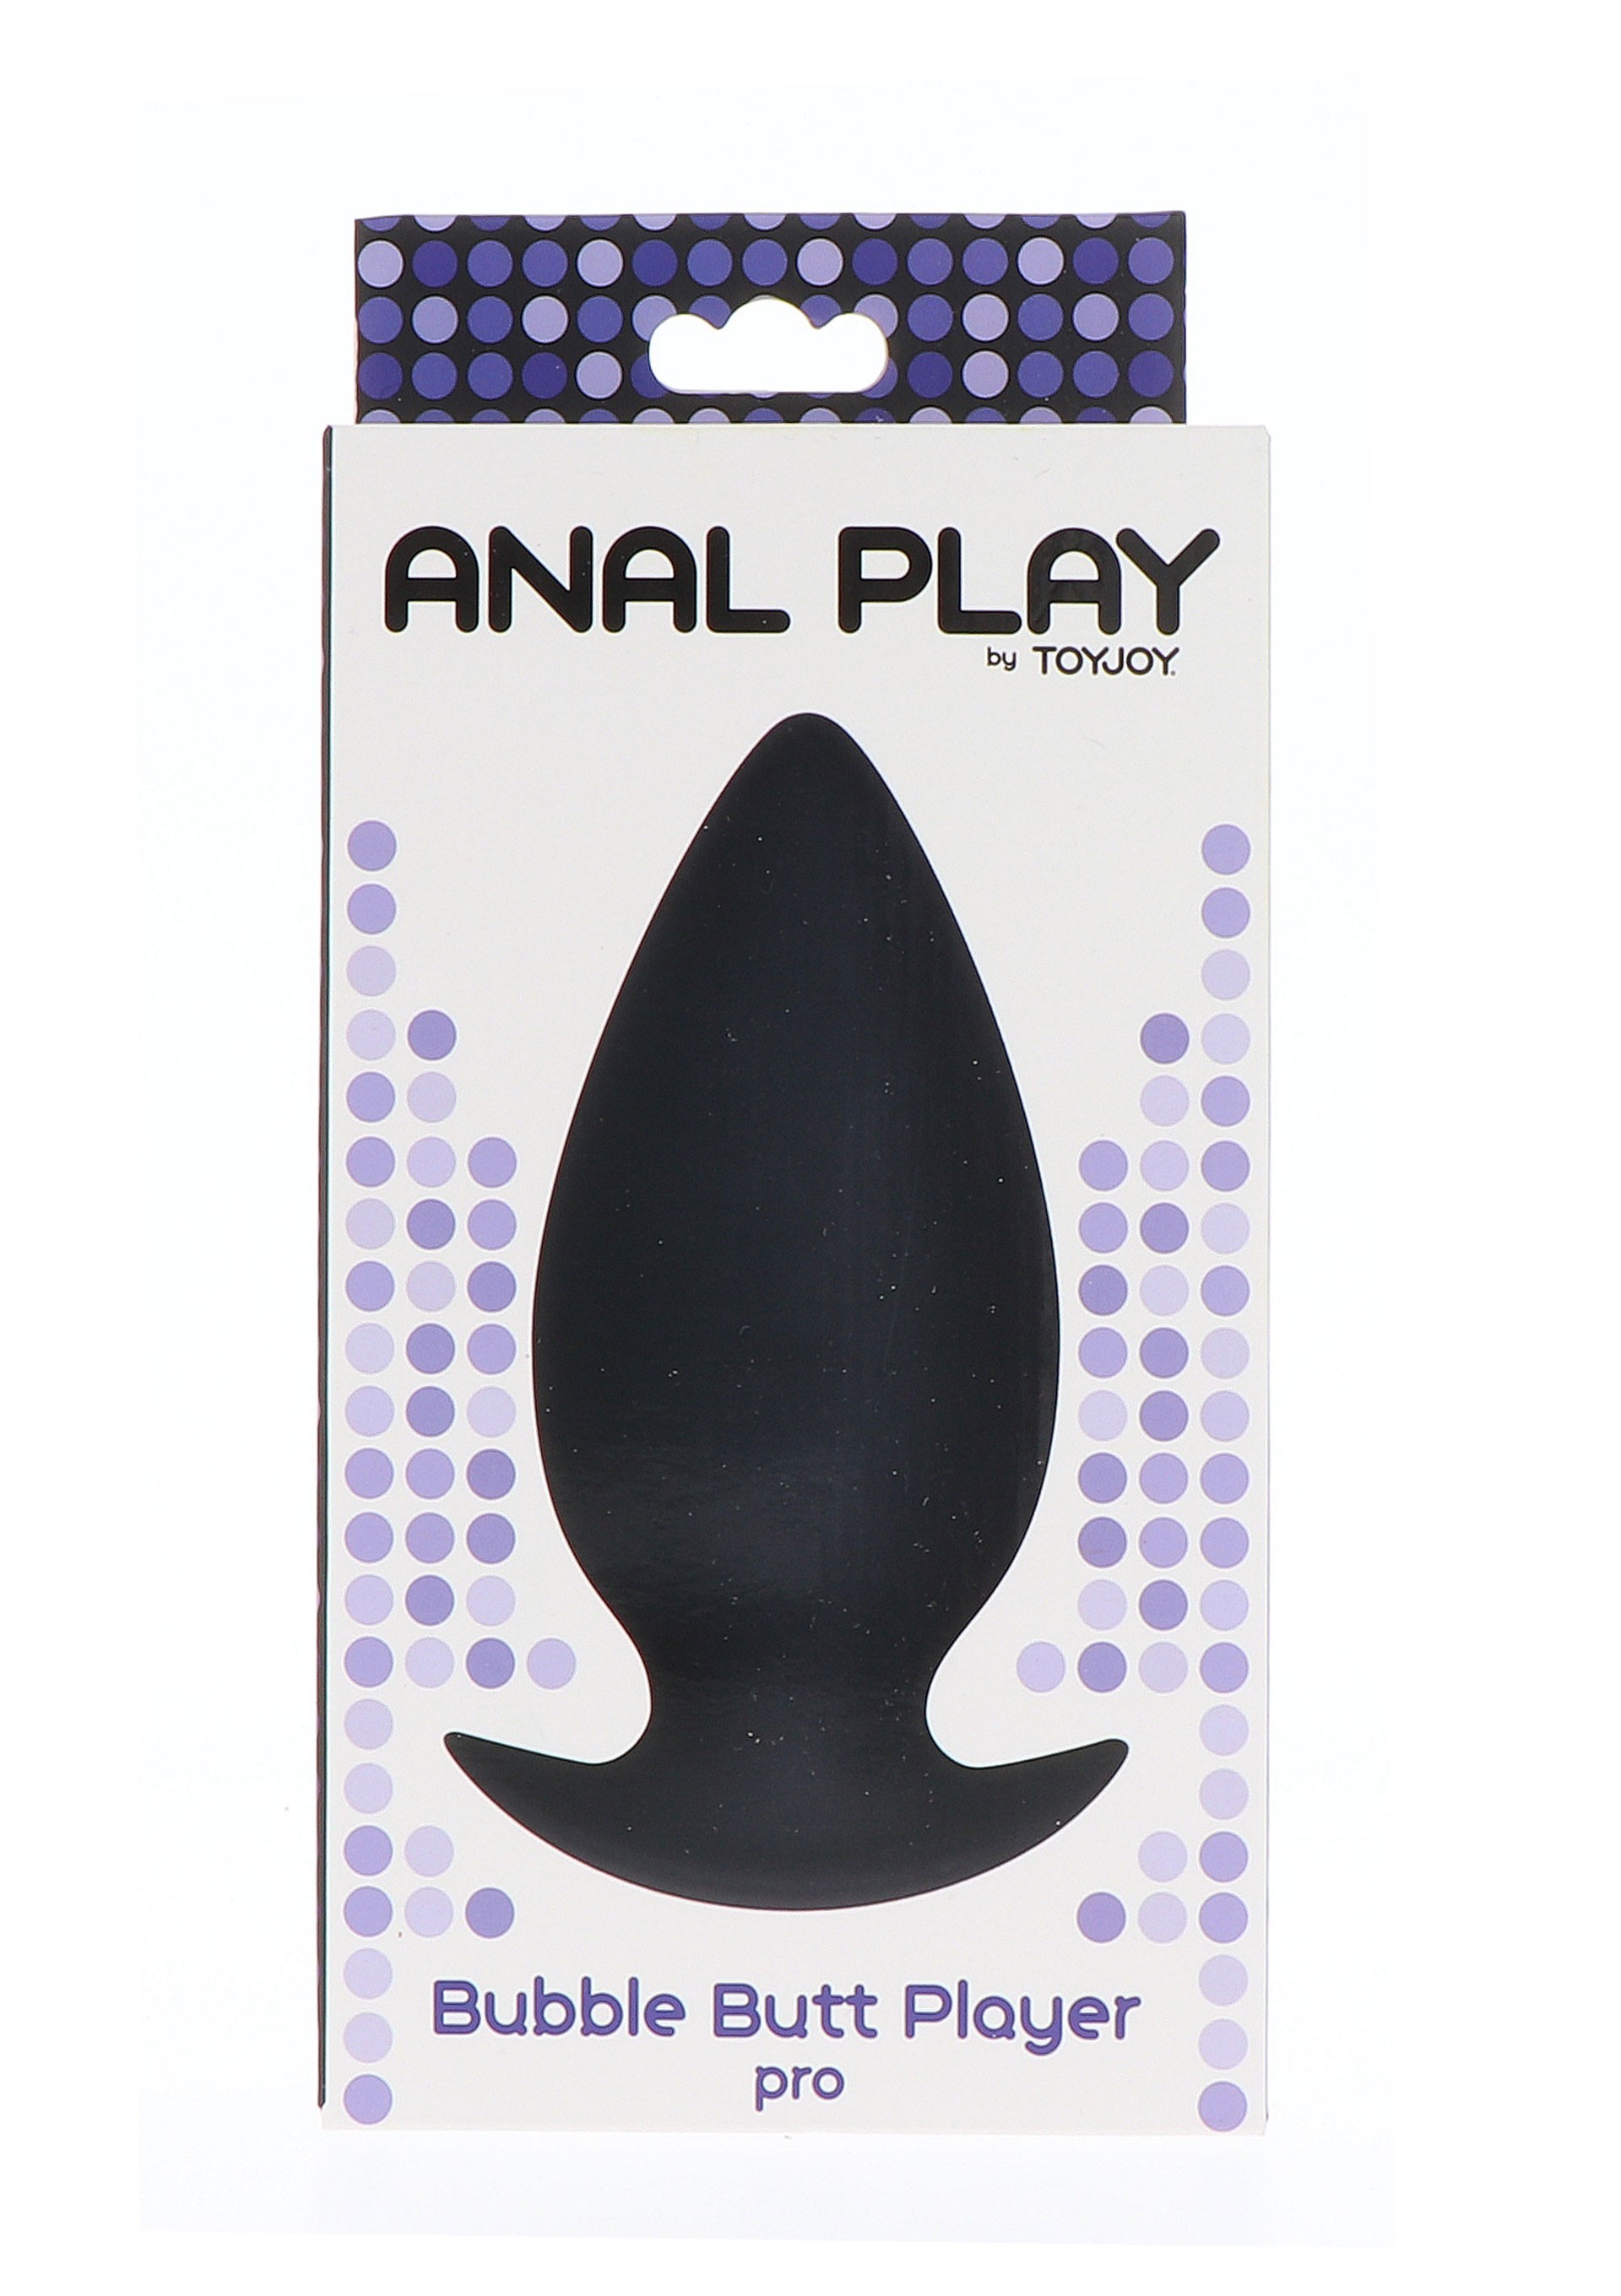 Toy Joy Bubble Butt Player Pro Anal Plug